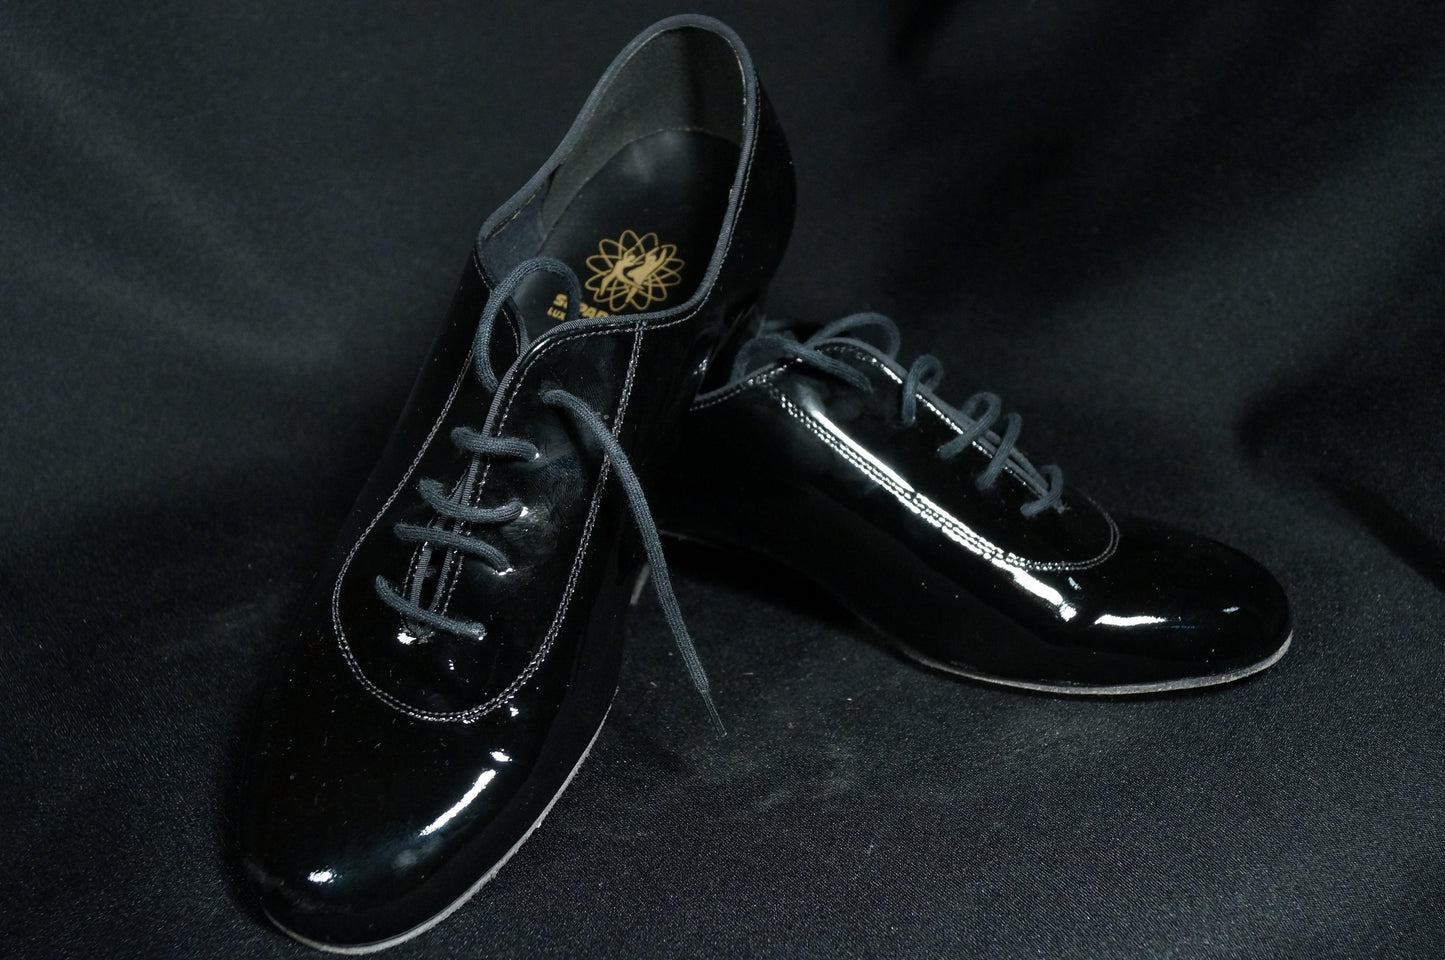 Supadance Ballroom Shoes - DDressing, ballroom shoes for men, dancing shoes, men dance shoes, supadance black patent shoes